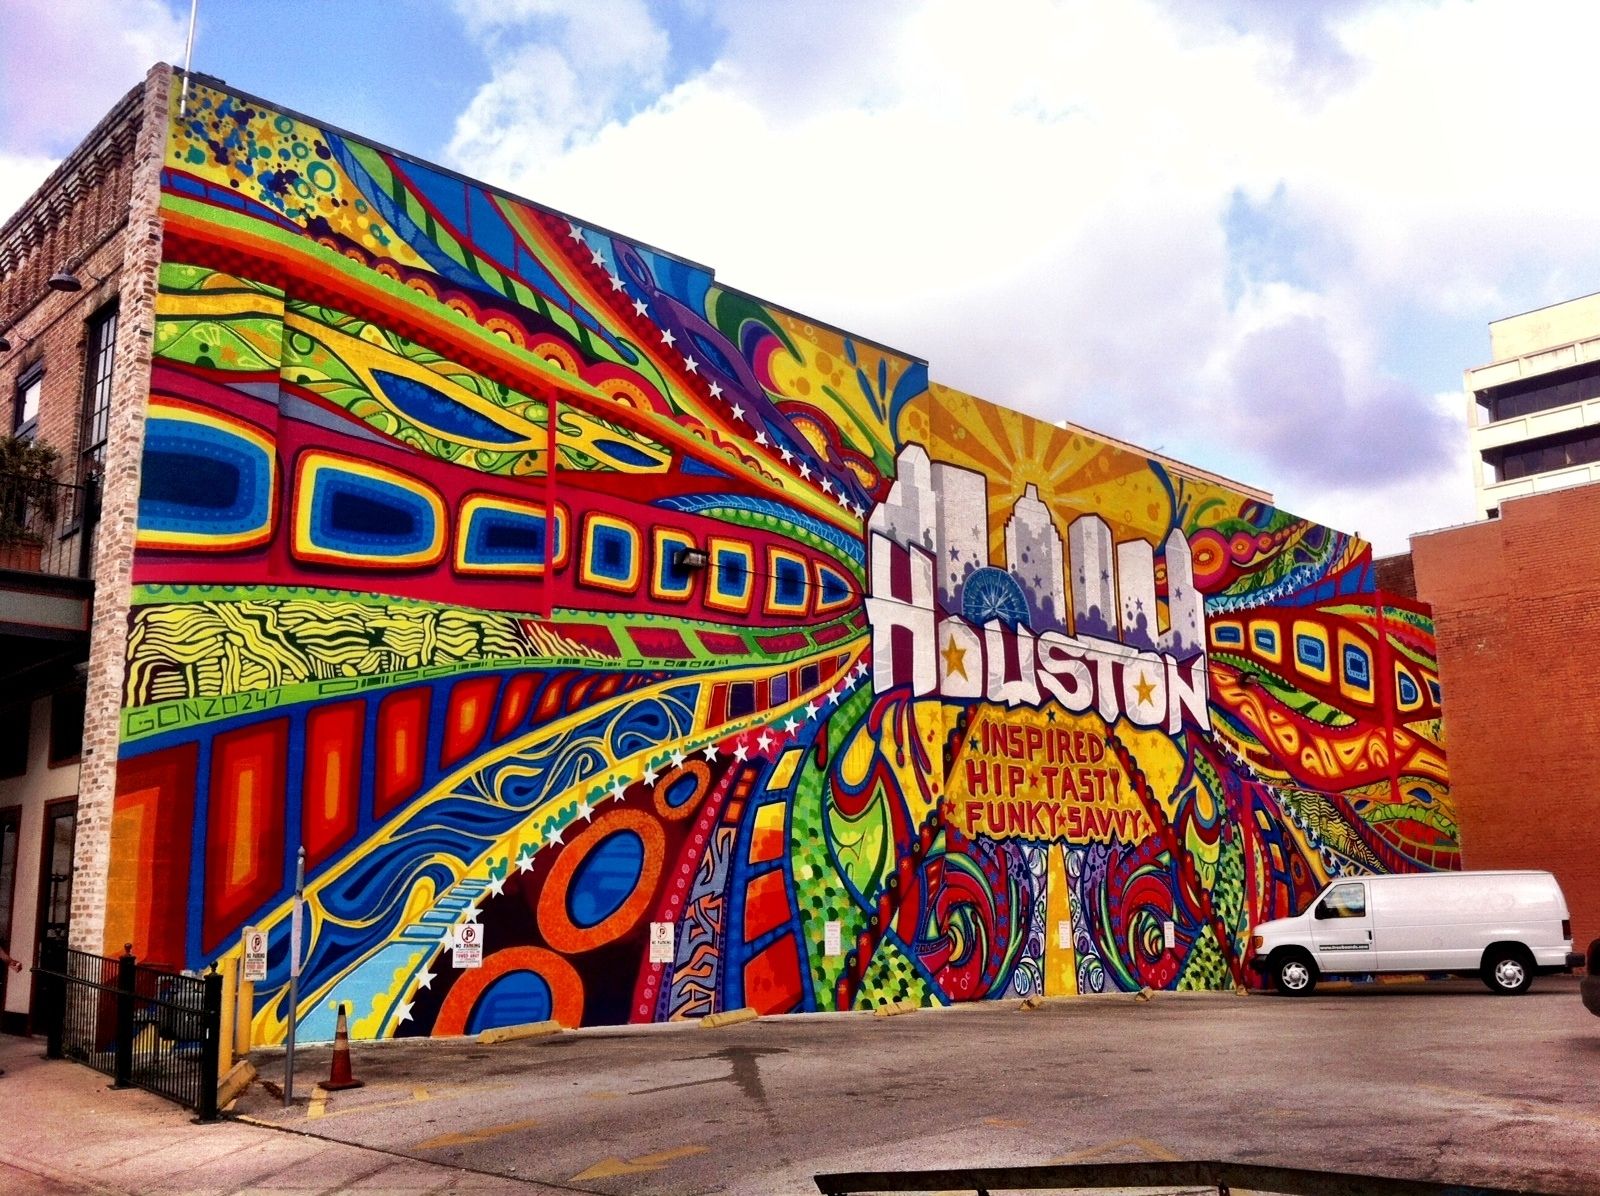 Graffiti Wall Hanging Houston Wall Art Himalayantrexplorers Ideal With Regard To Houston Wall Art (View 2 of 20)